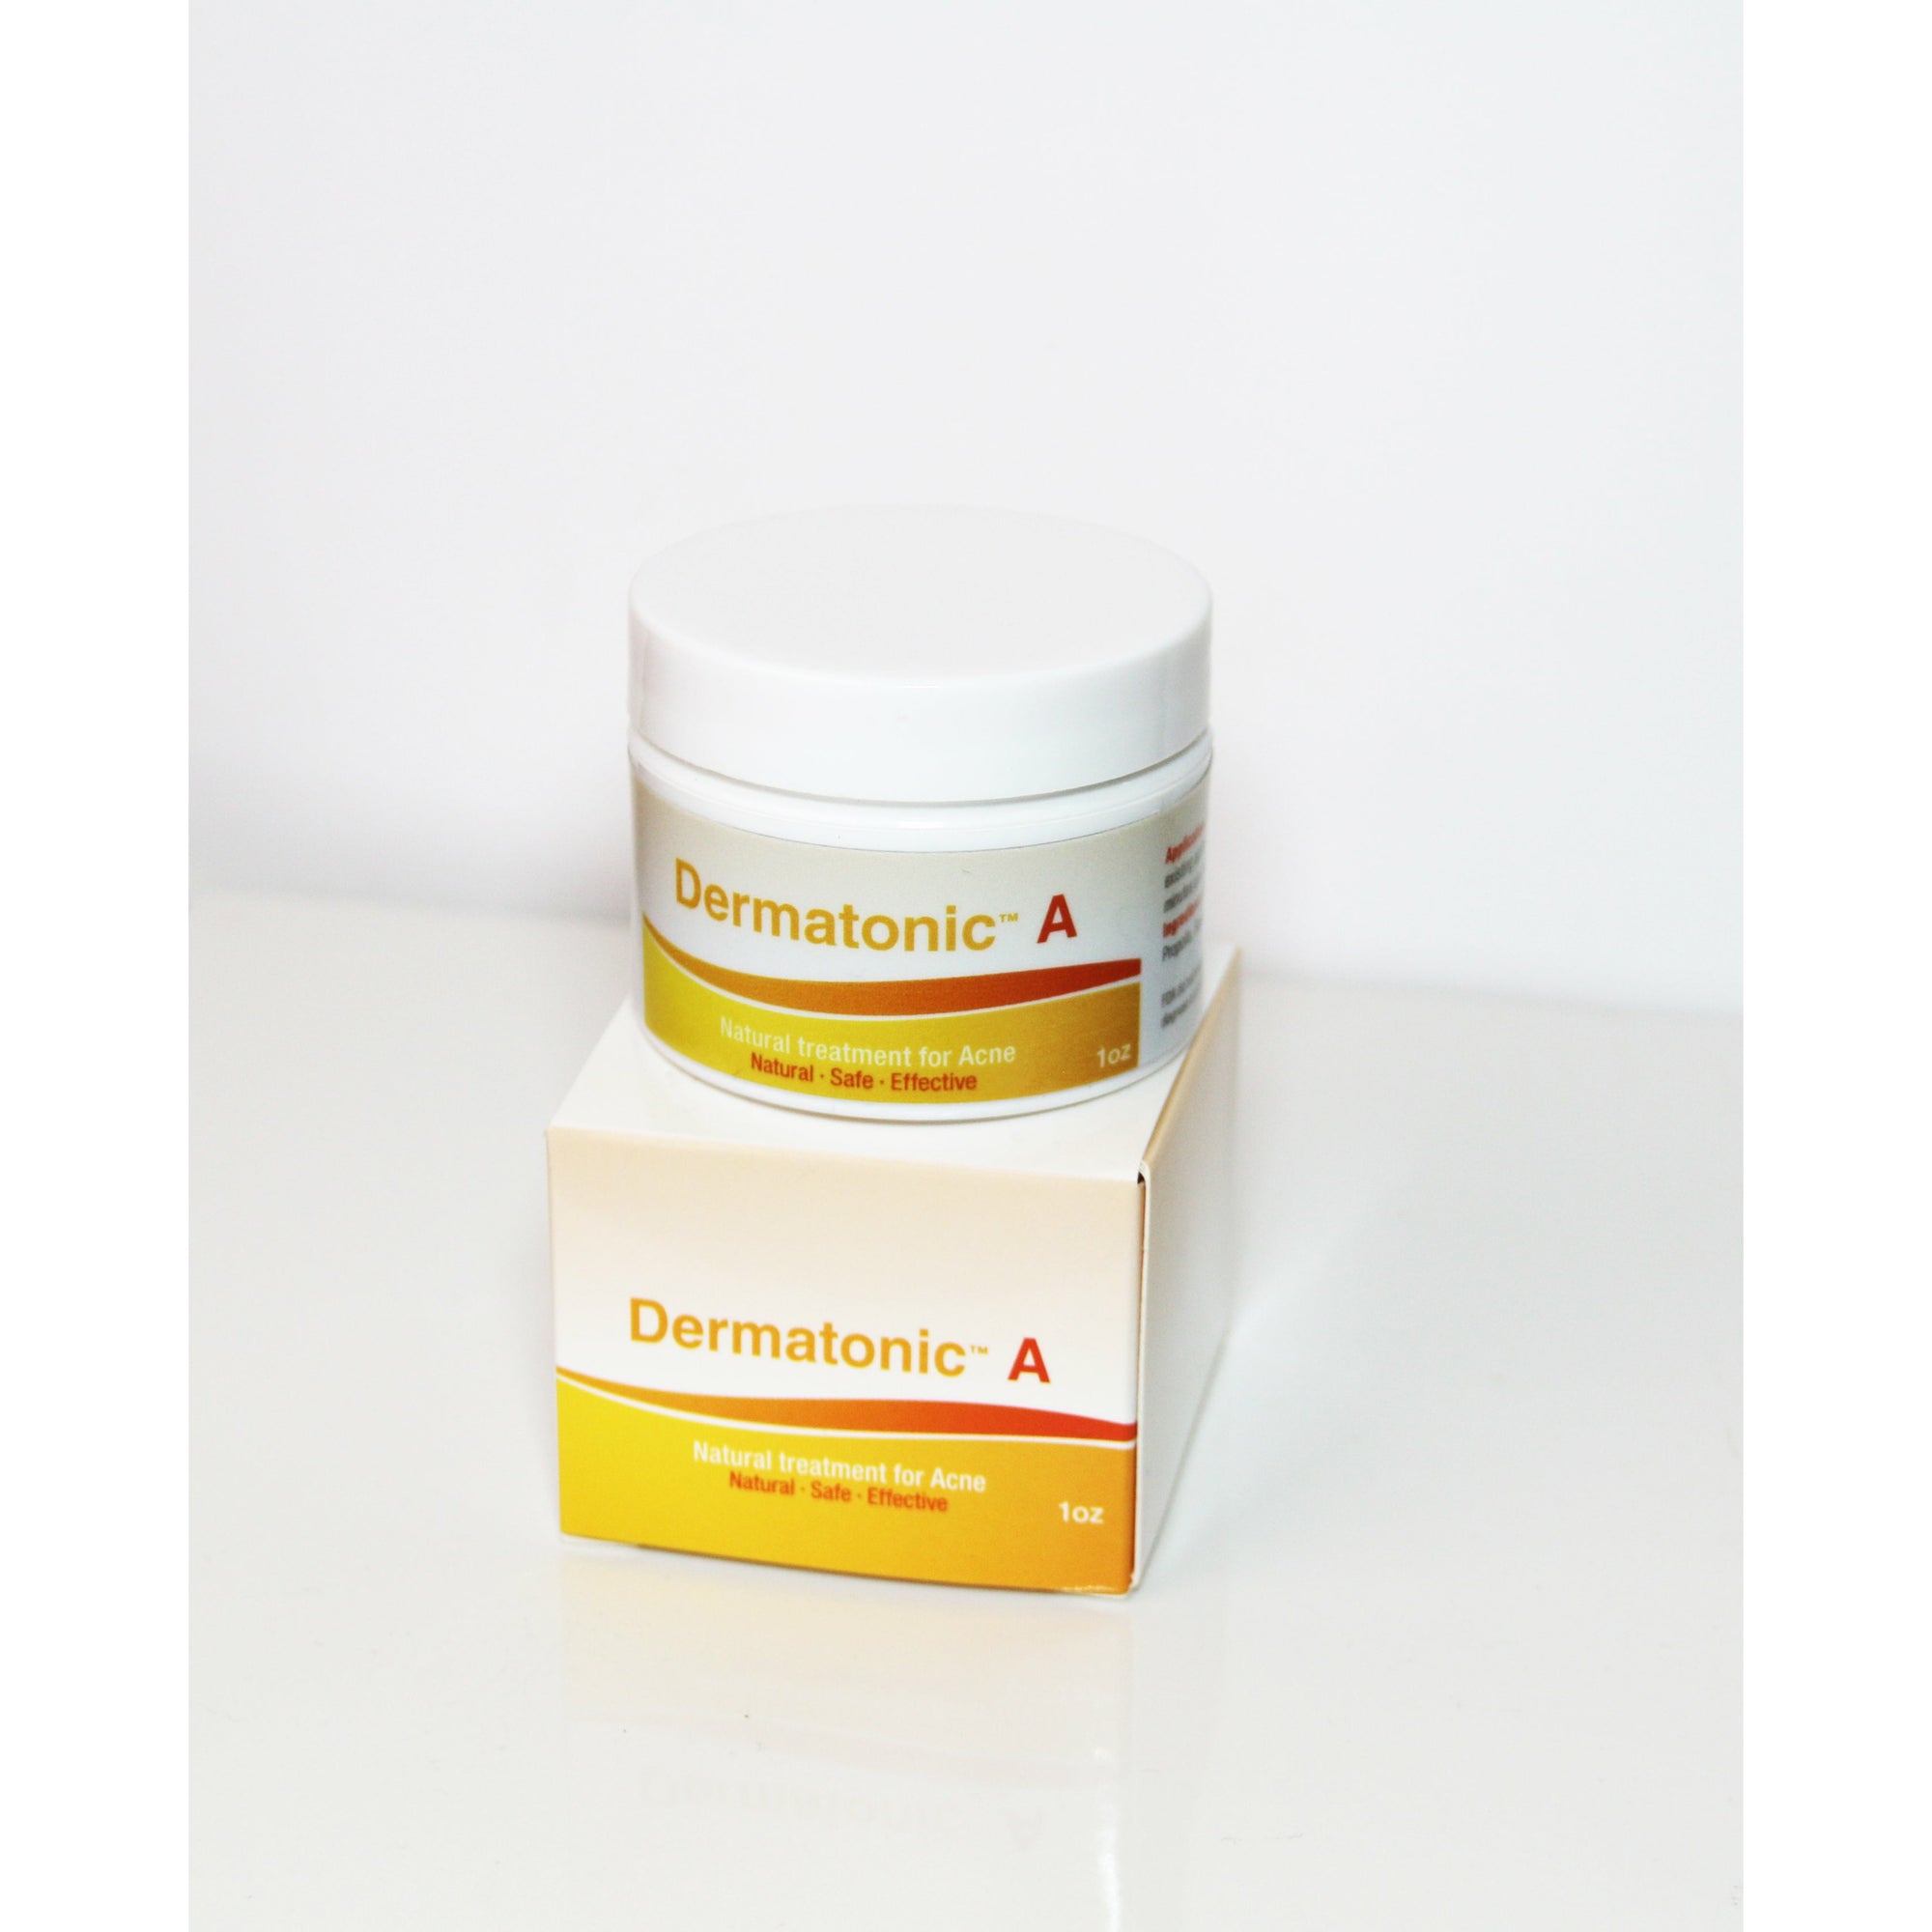 Dermatonic A (Acne Care)